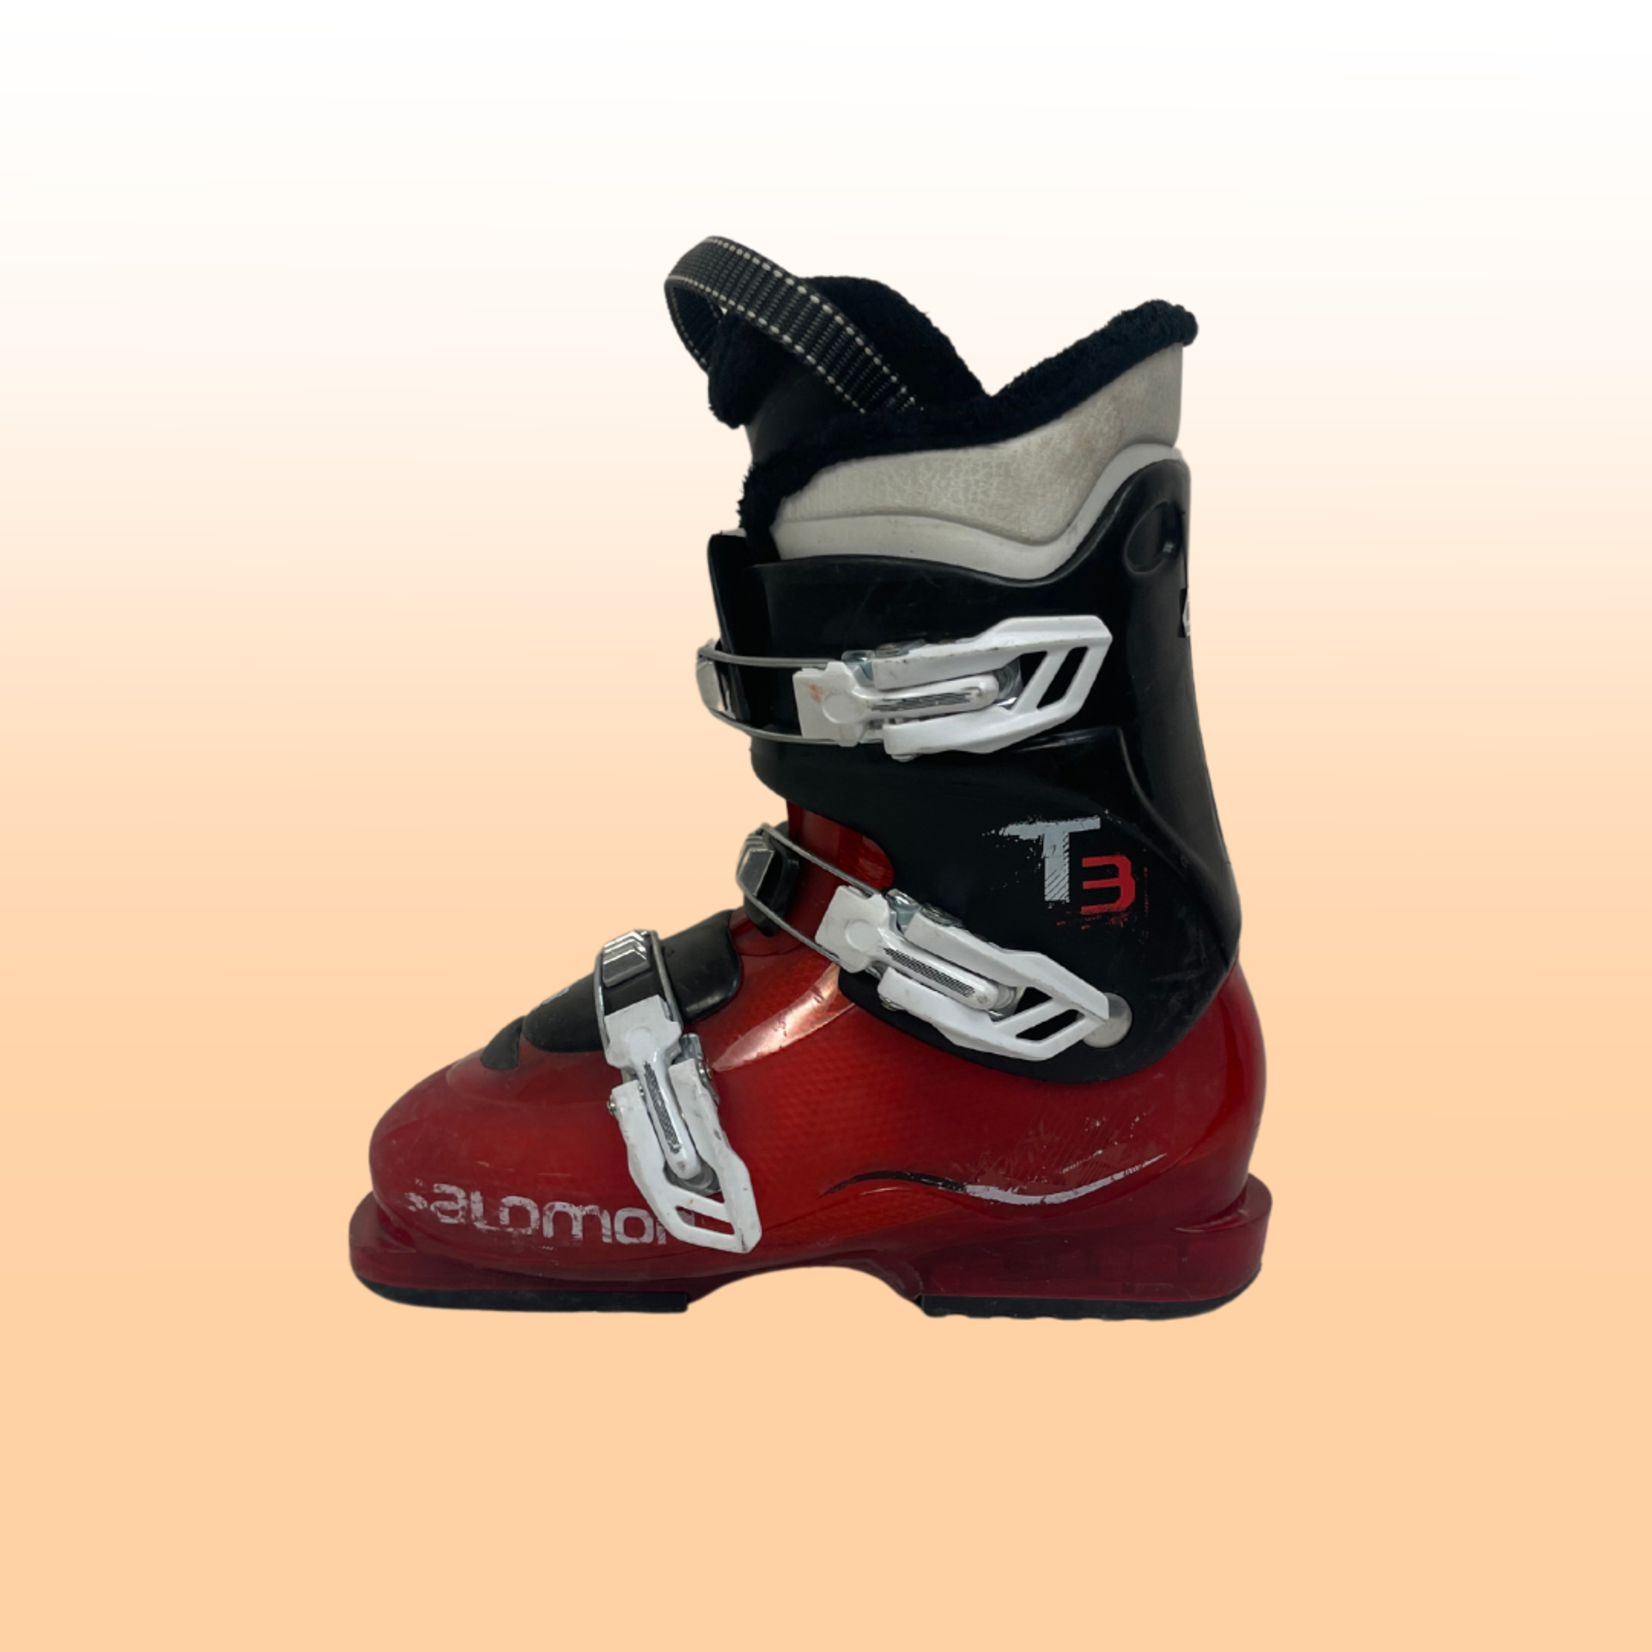 Salomon Salomon T3 Kids Ski Boots, Size 25.5